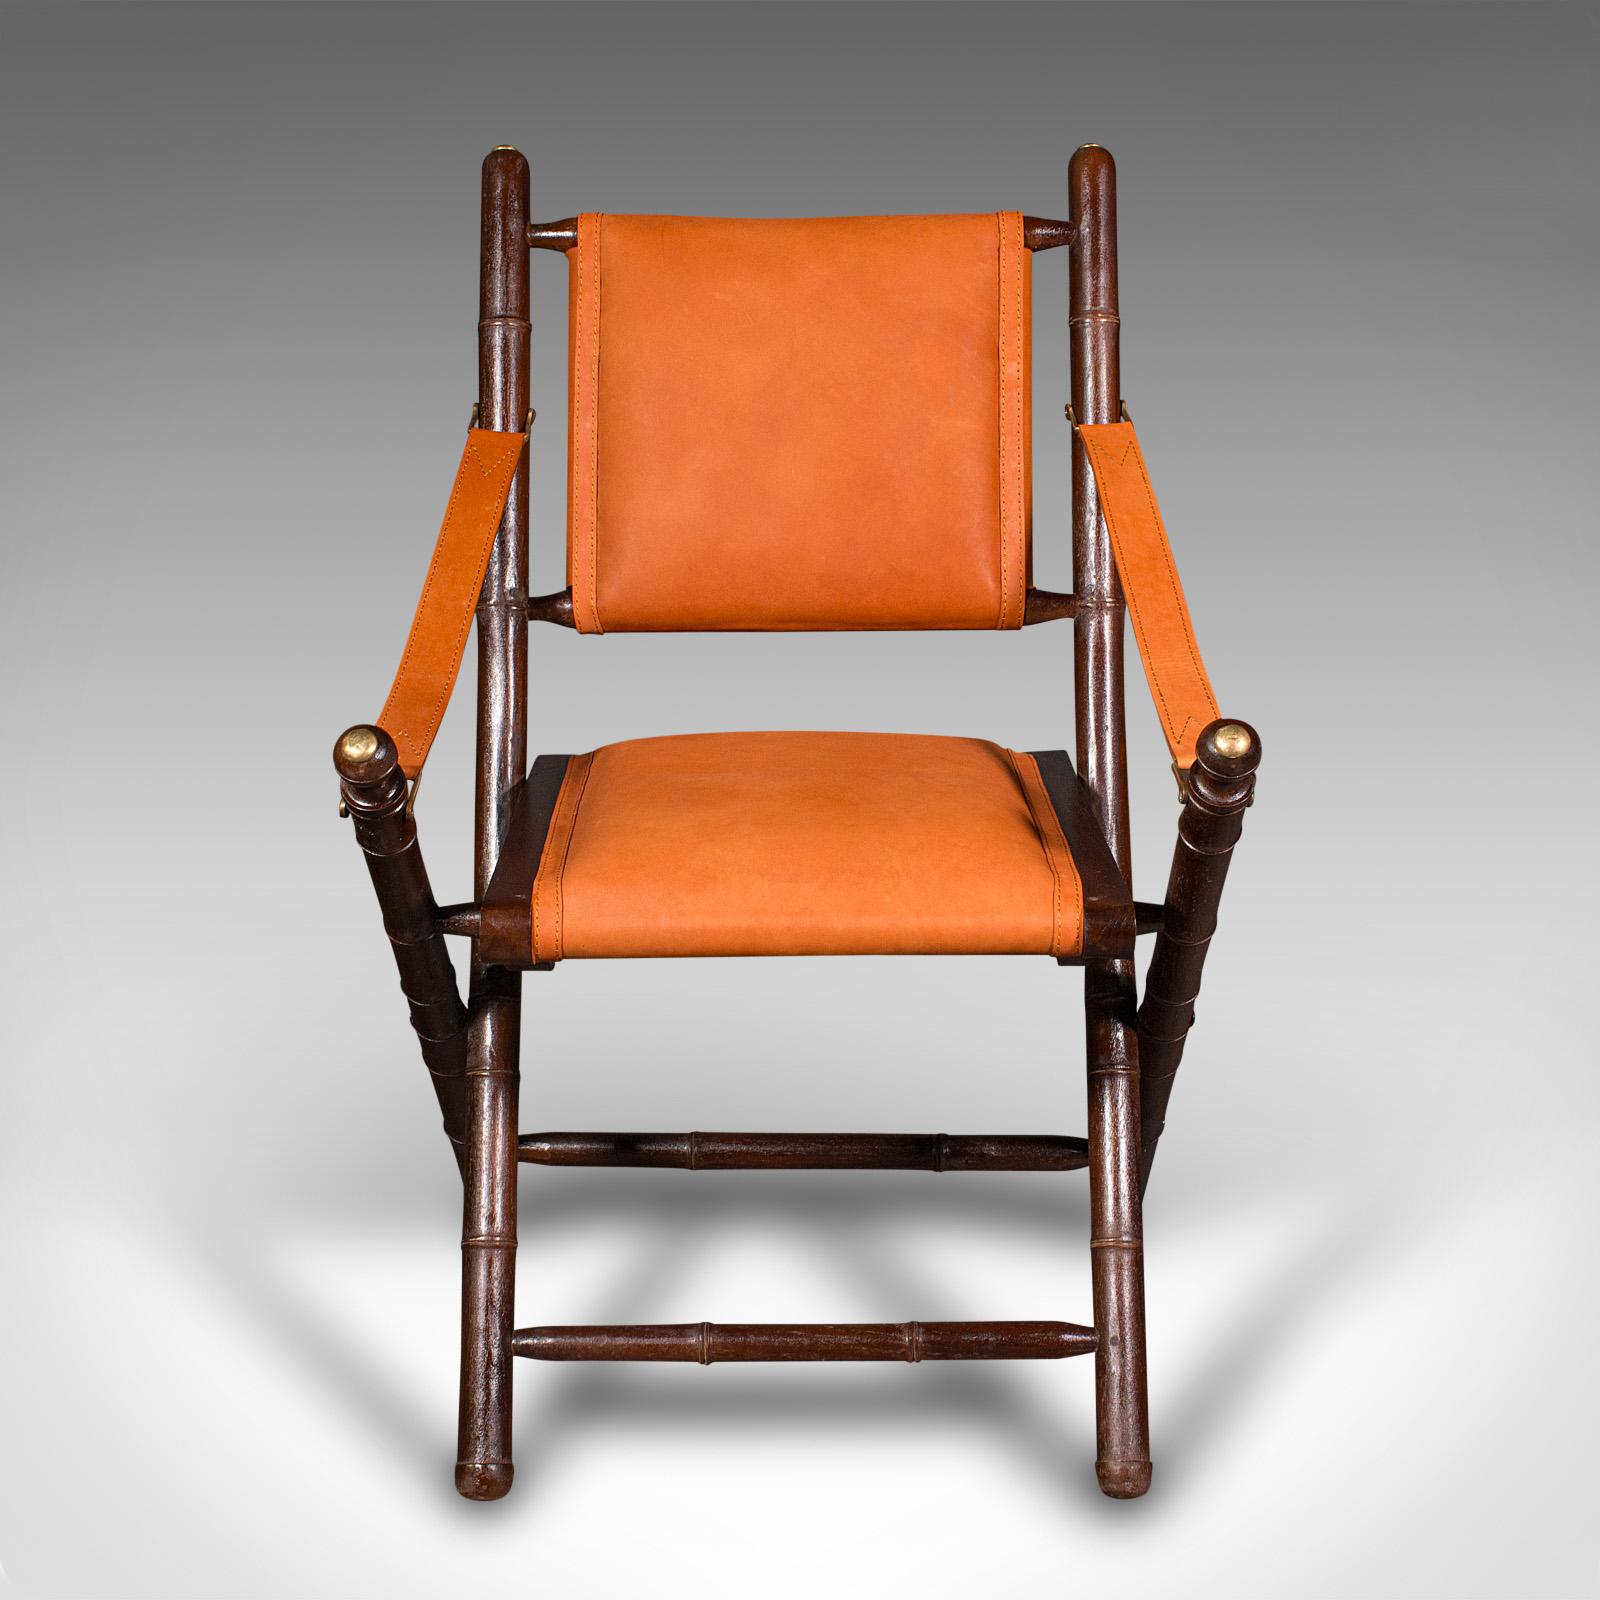 British Pair Of Contemporary Orangery Chairs, English, Leather, Veranda, Patio, Seat For Sale